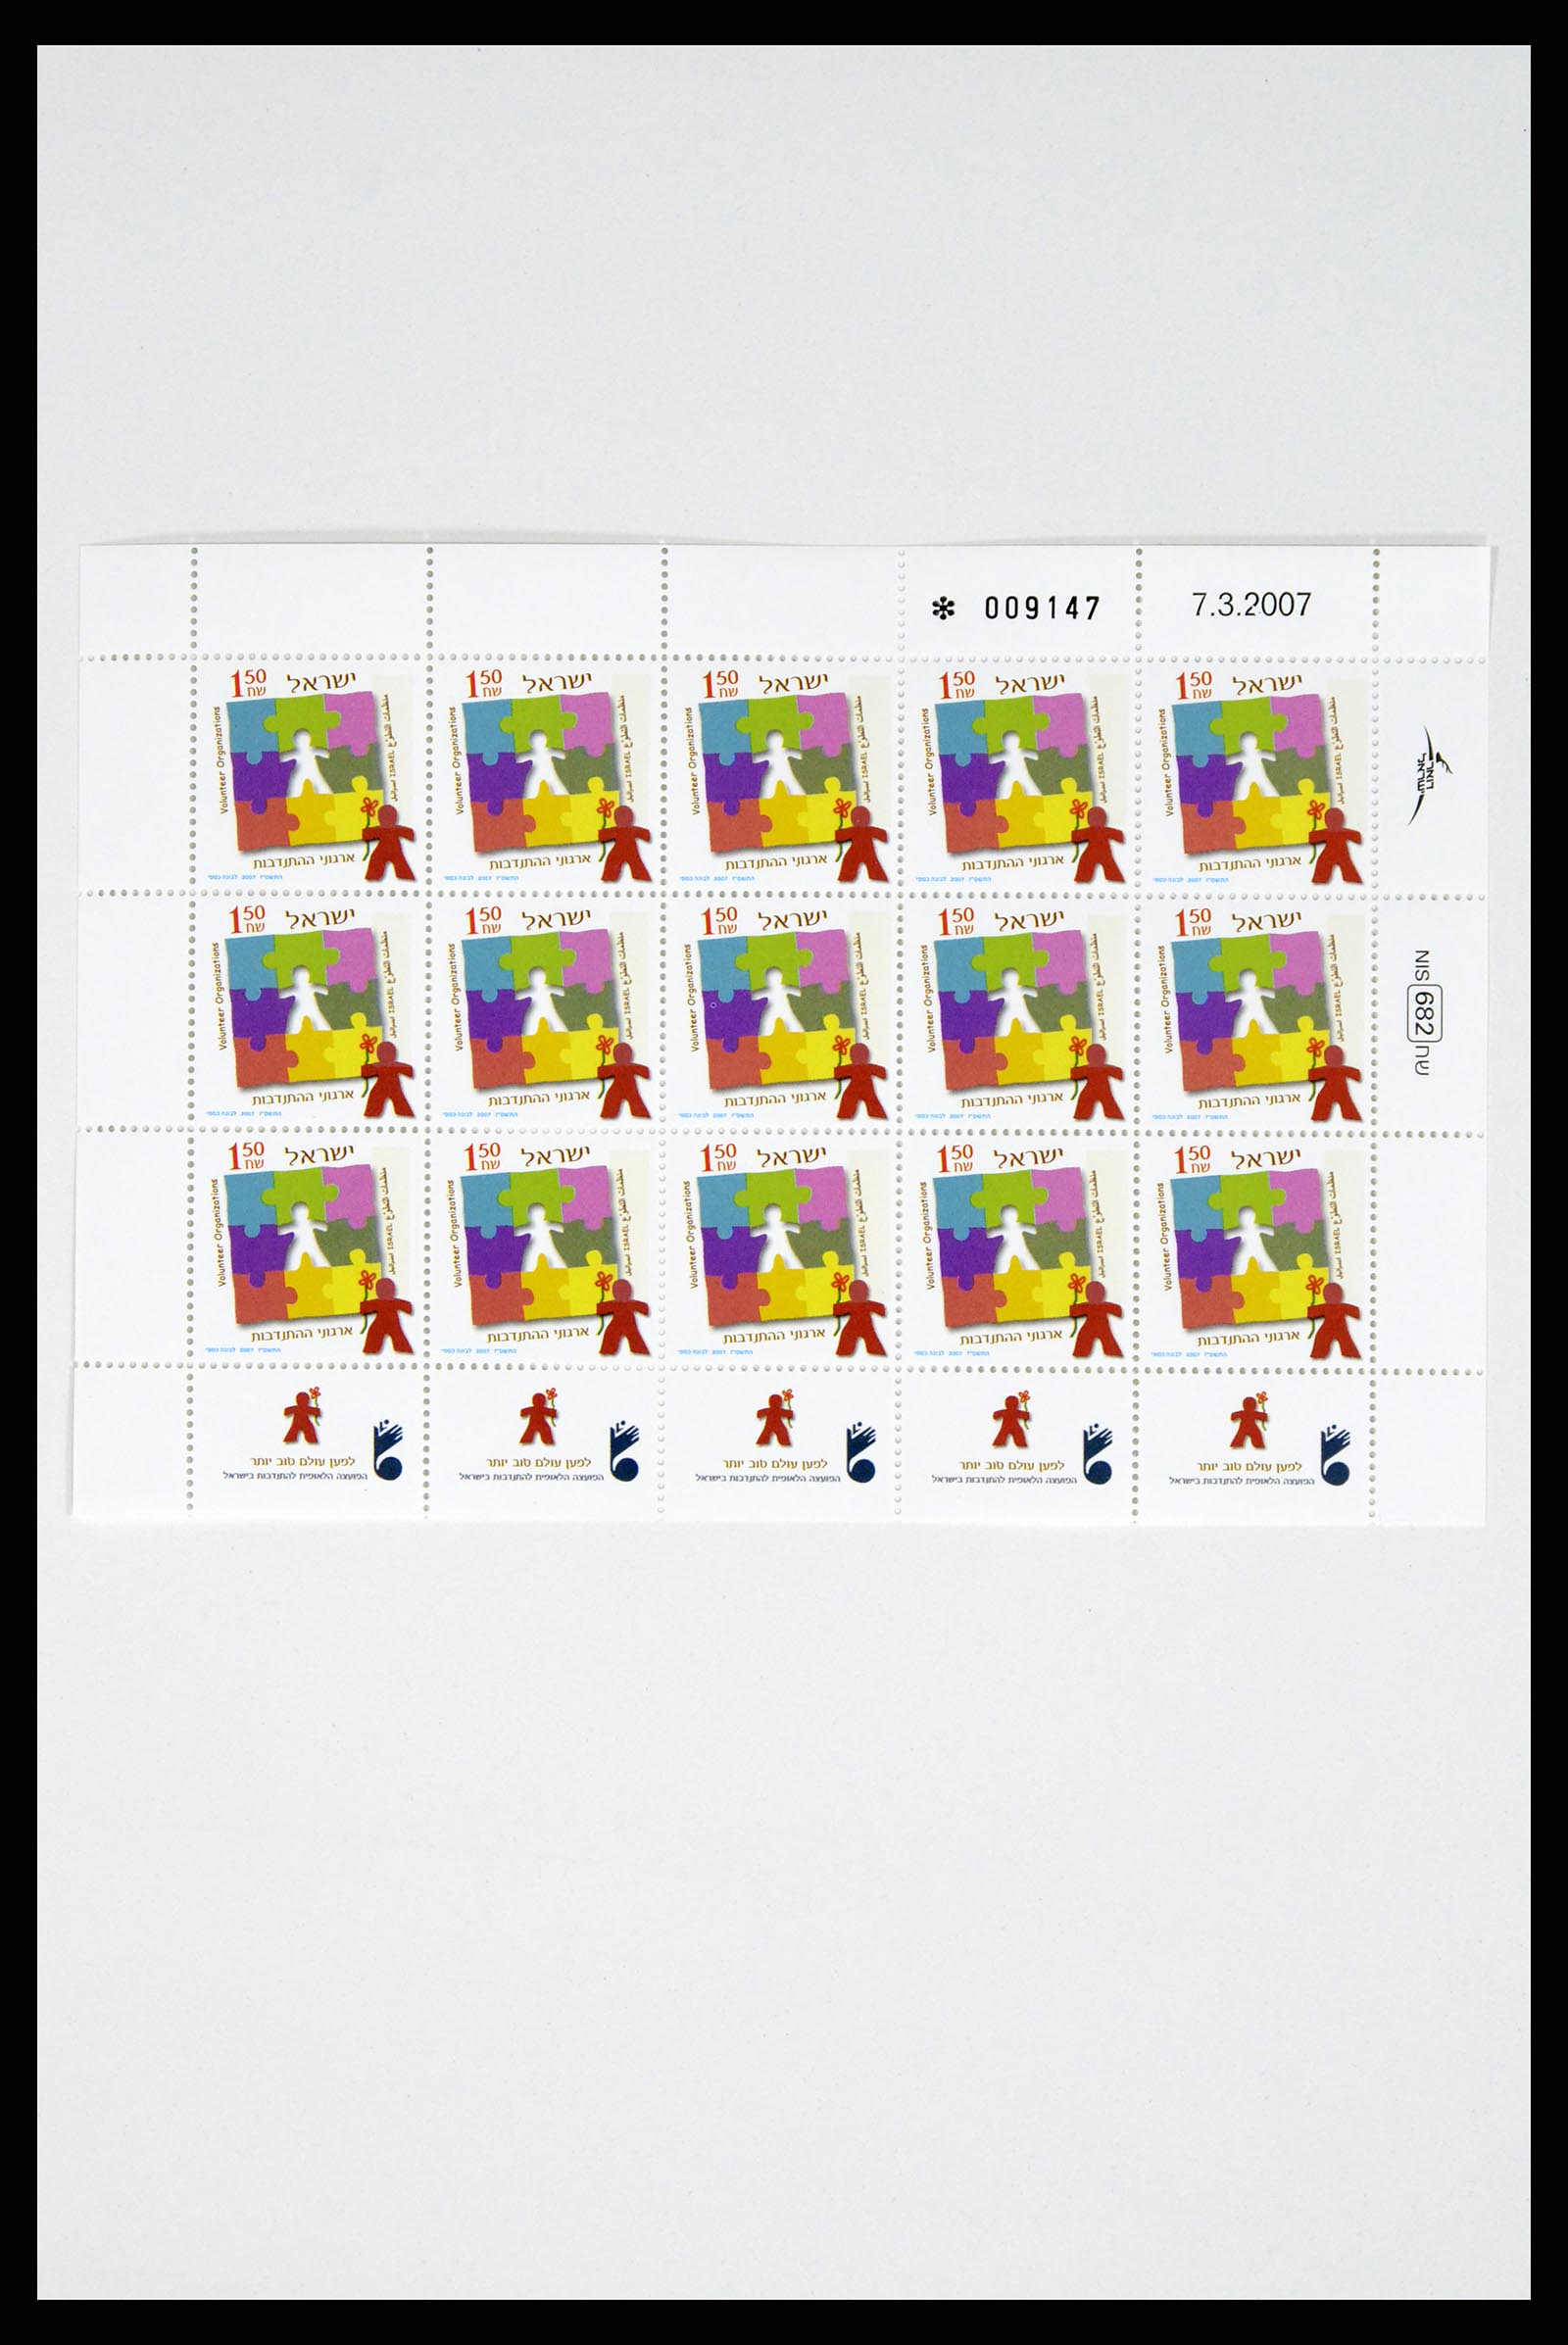 37779 037 - Stamp collection 37779 Israel sheetlets 1986-2009.